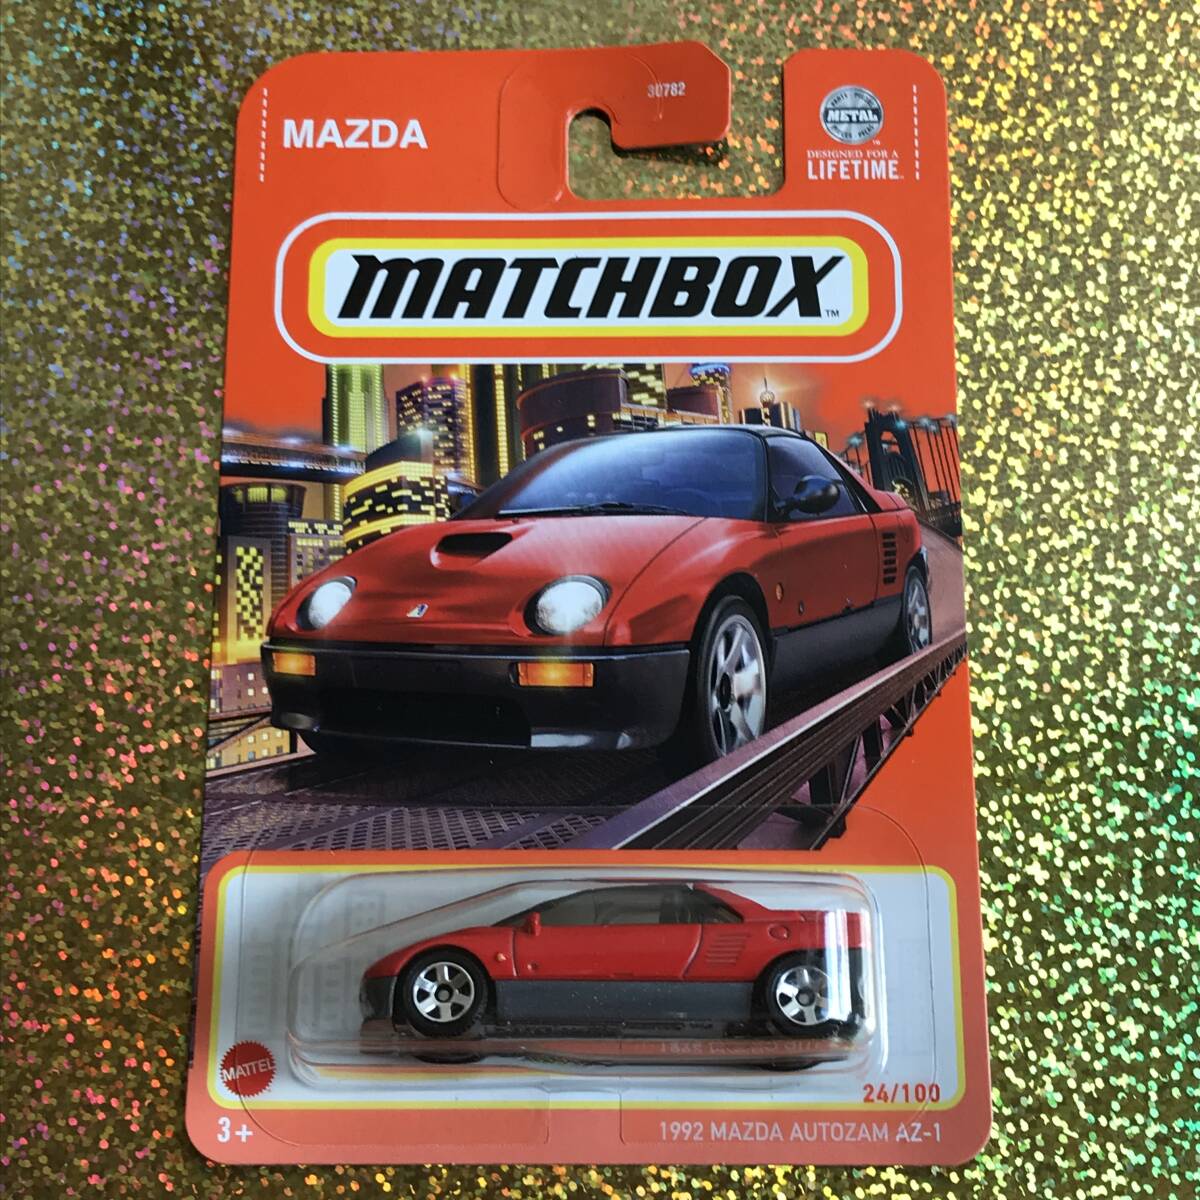 27, 1992 MAZDA AUTOZAM AZ-1, レッド, ブリスターパッケージ 【マッチボックス】の画像2